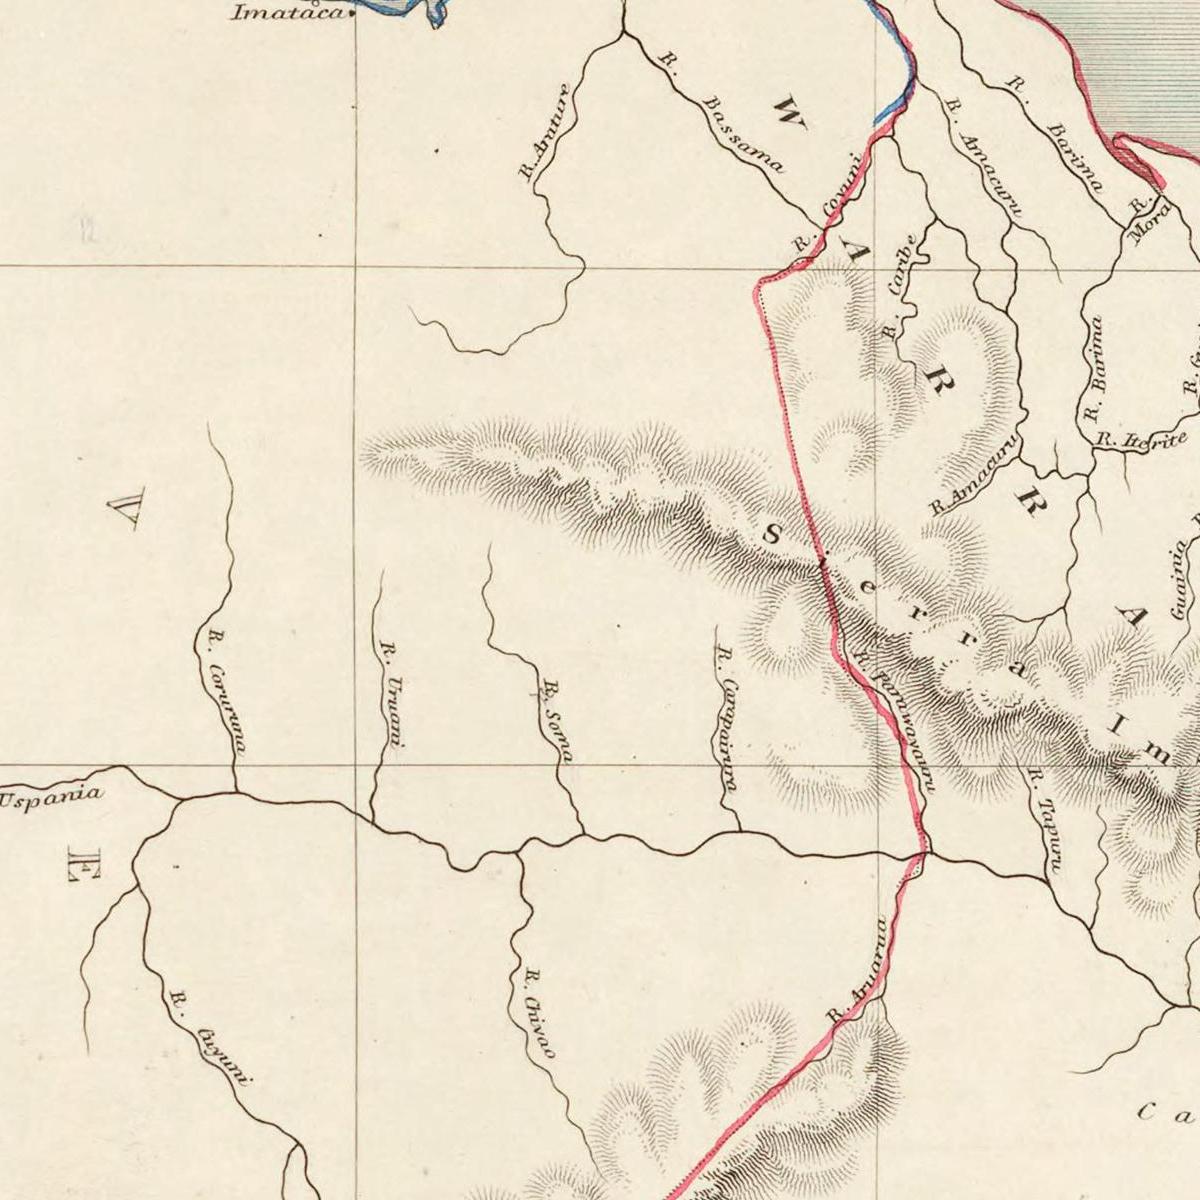 Historische Landkarte Guyana um 1850